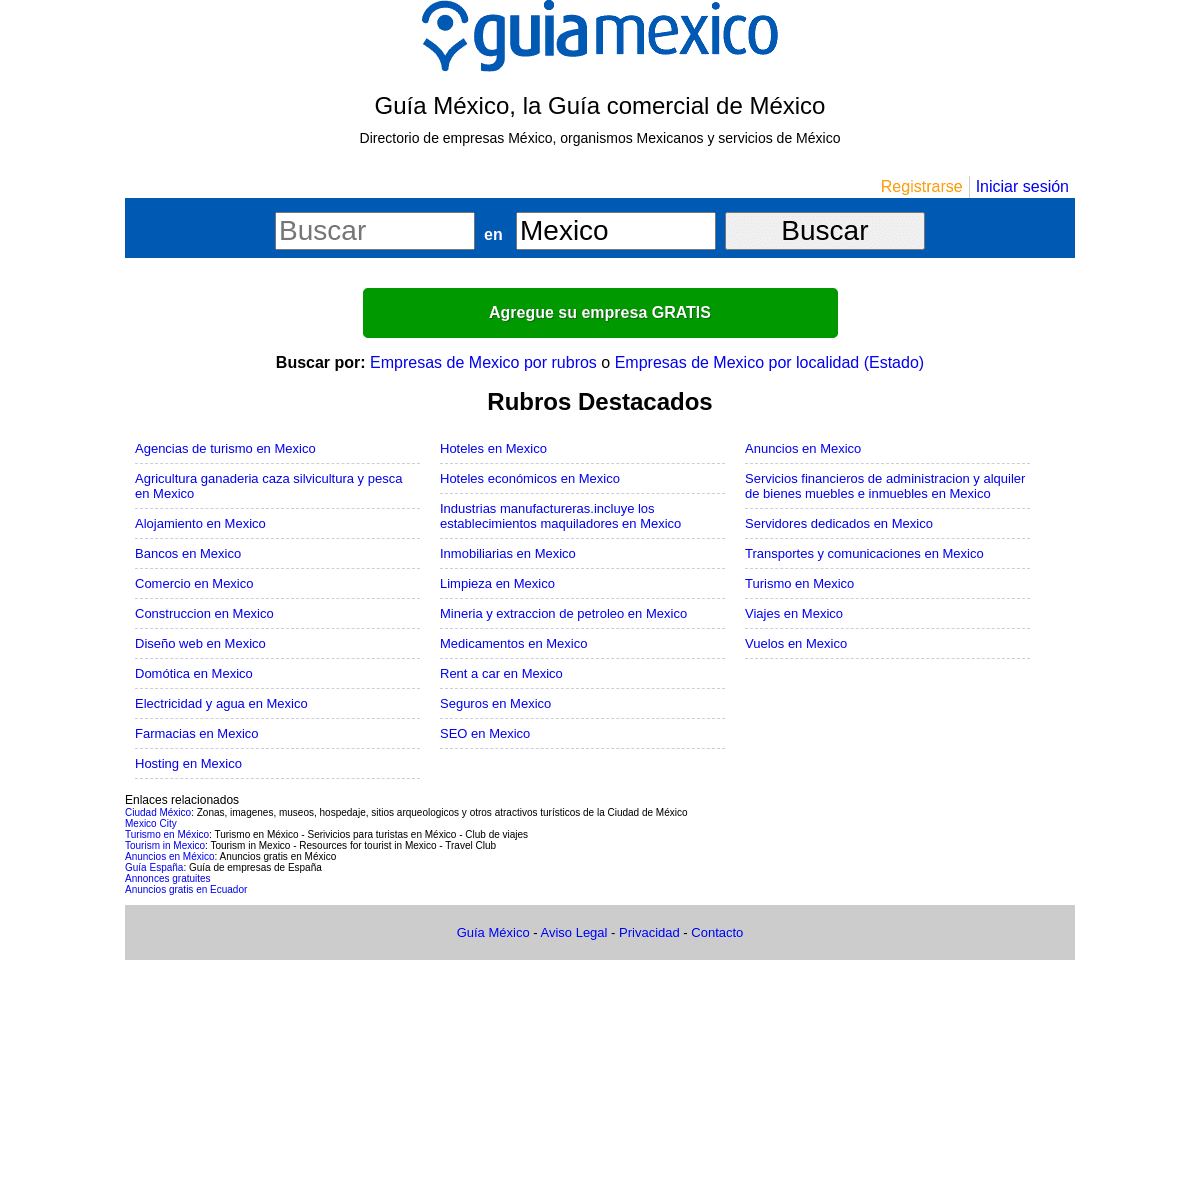 A complete backup of https://guiamexico.com.mx